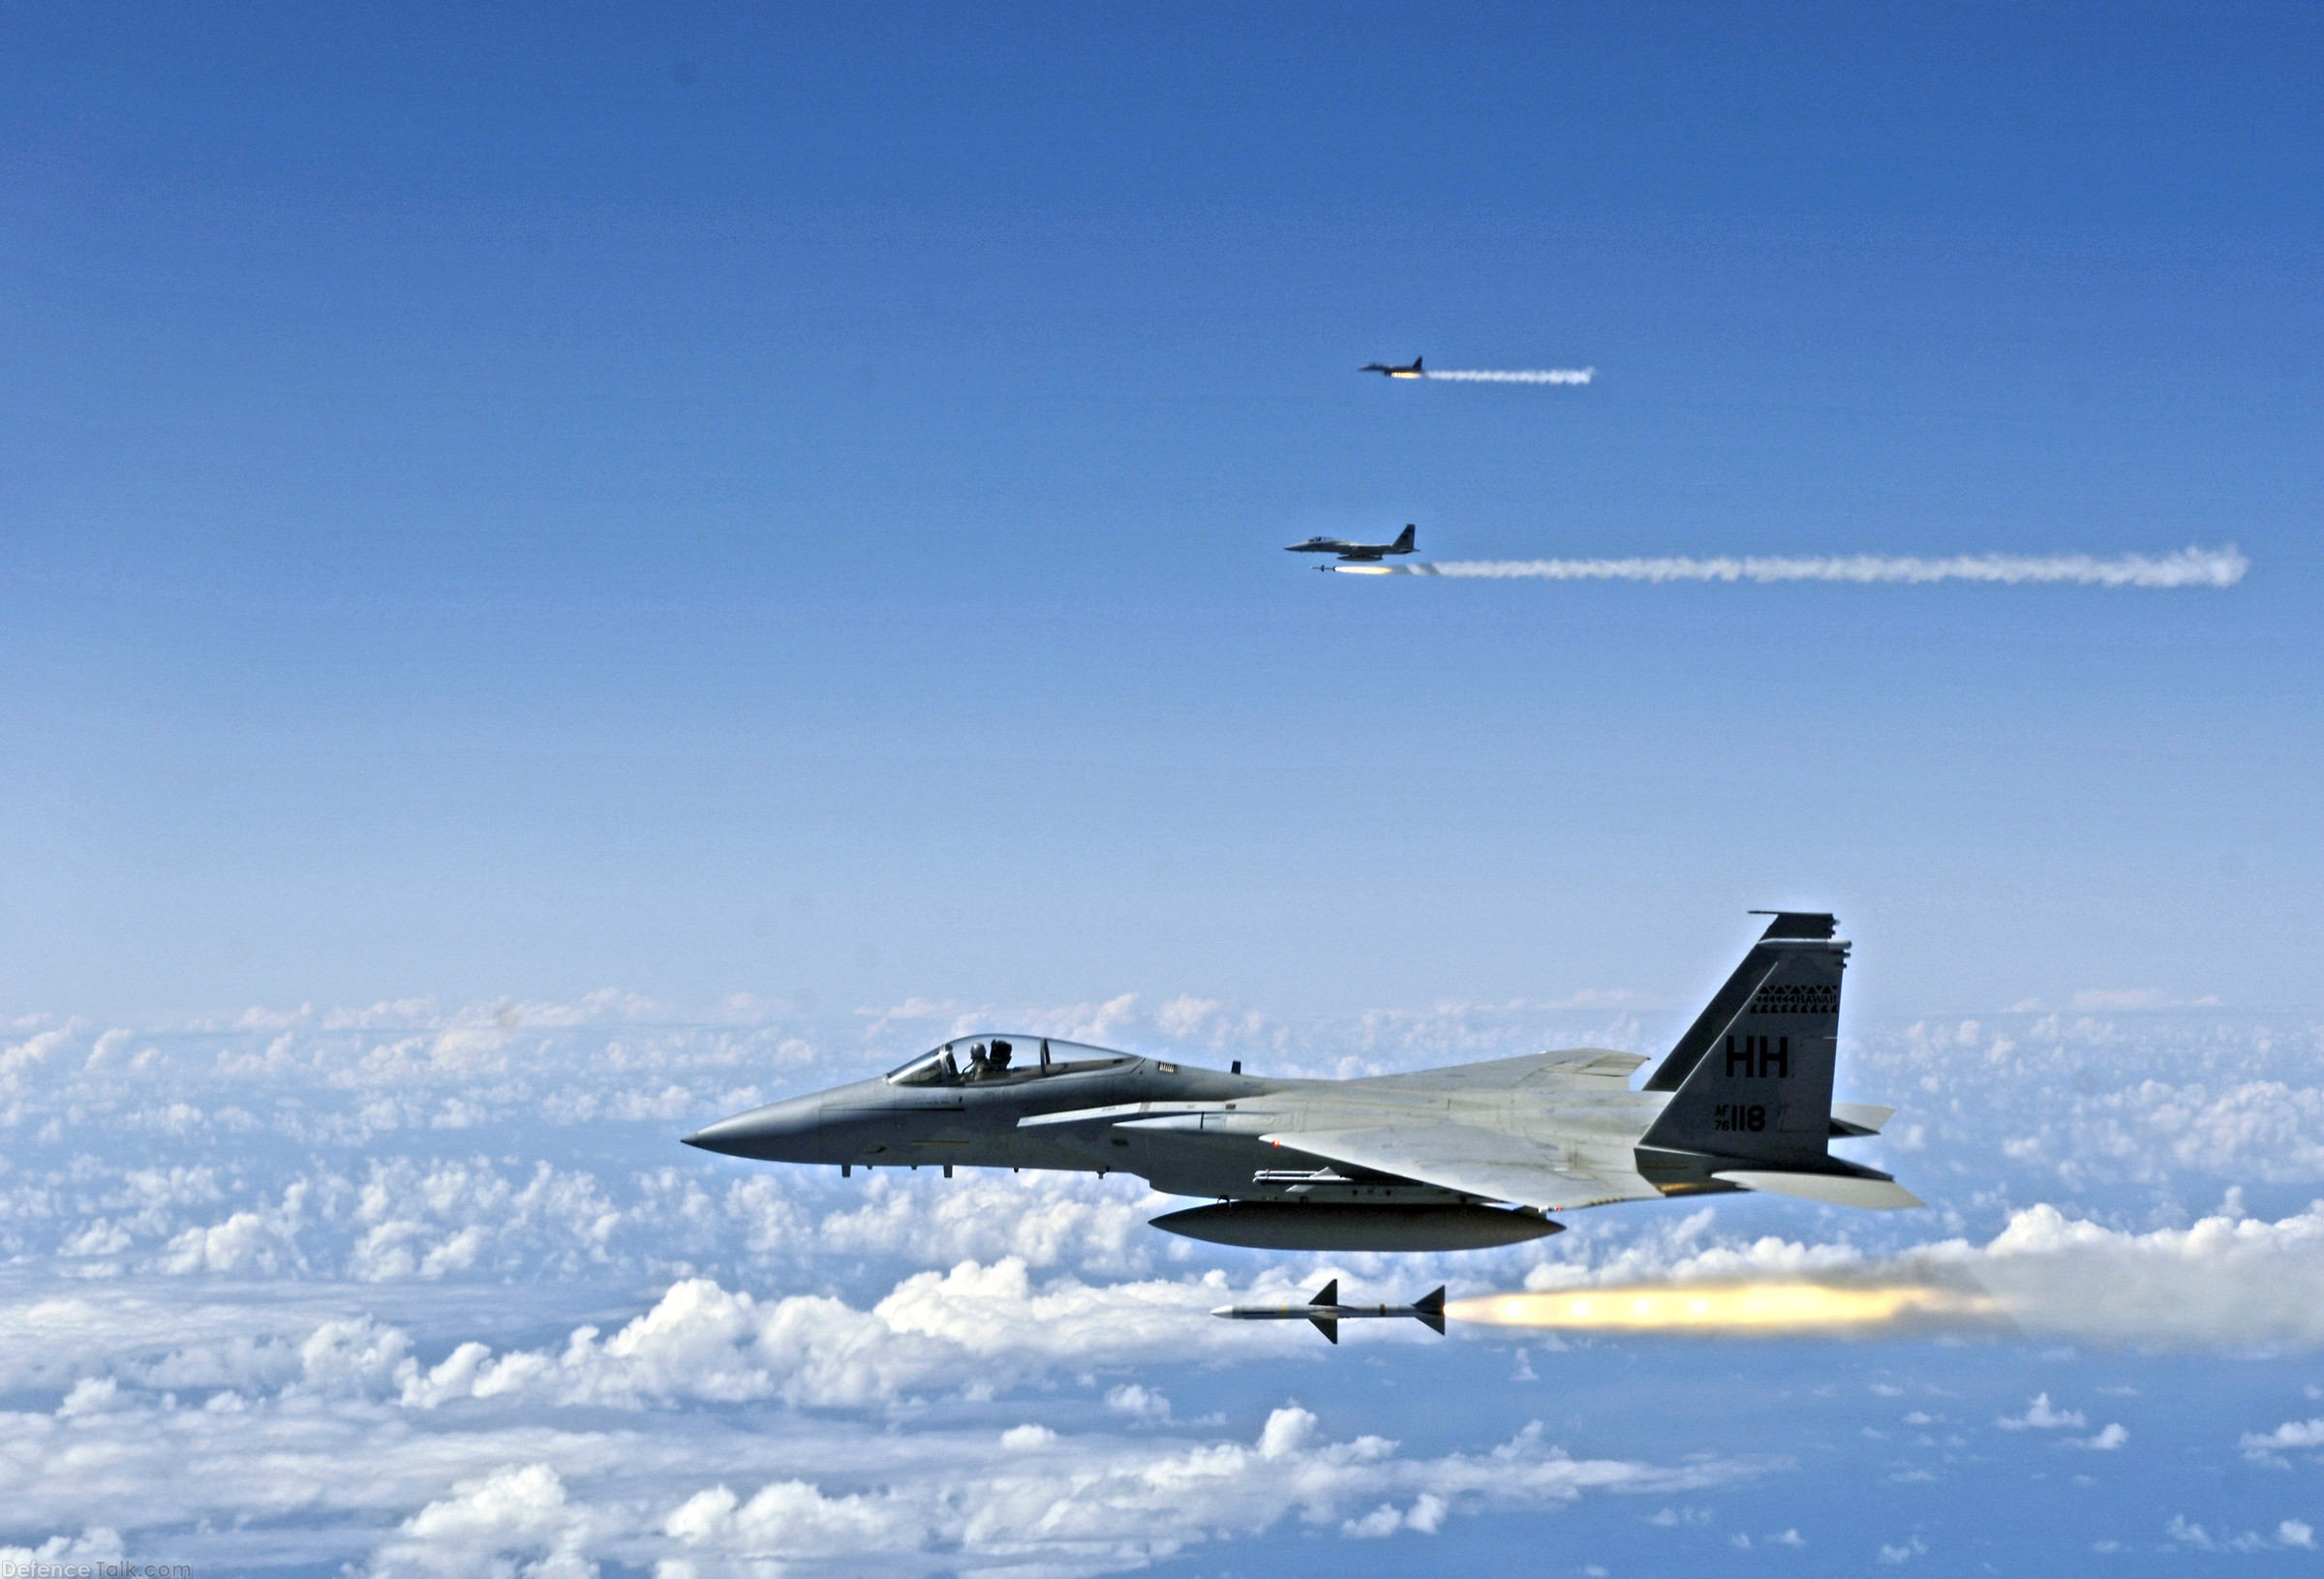 F-15 Eagles fire AIM-7 Sparrow missiles